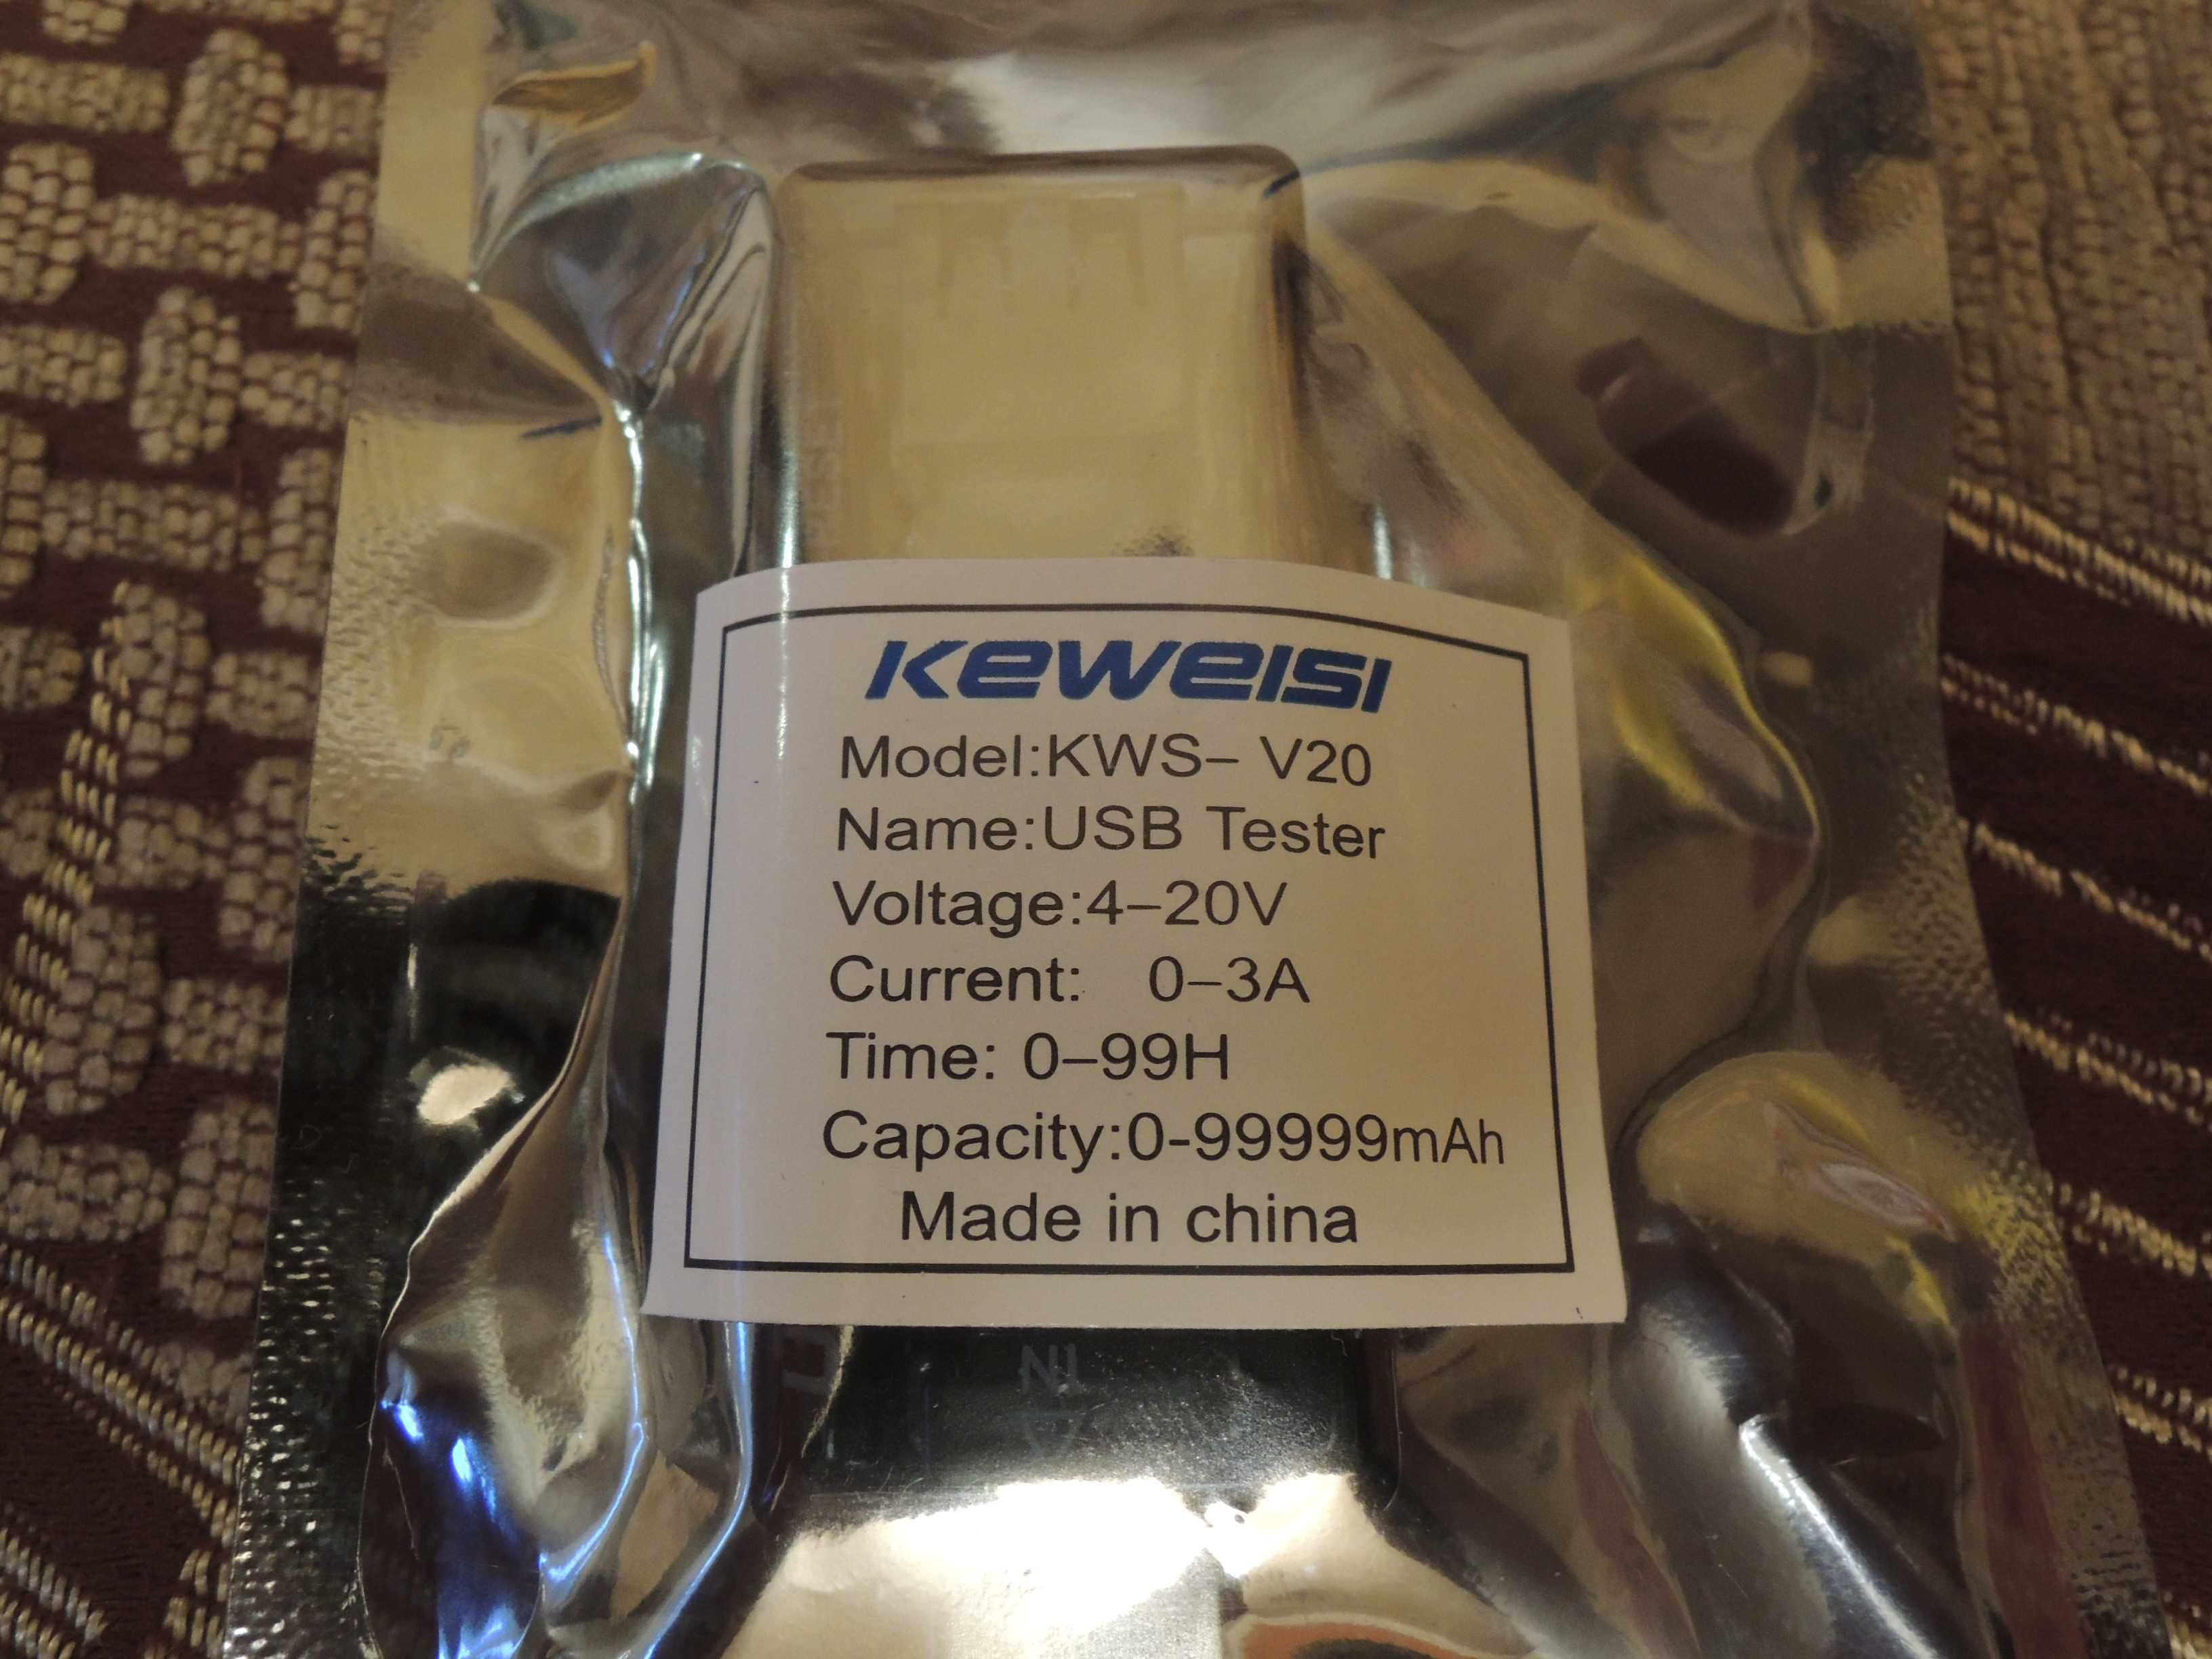 USB тестер Keweisi KWS-V20 – измеритель напряжения, тока, ёмкости